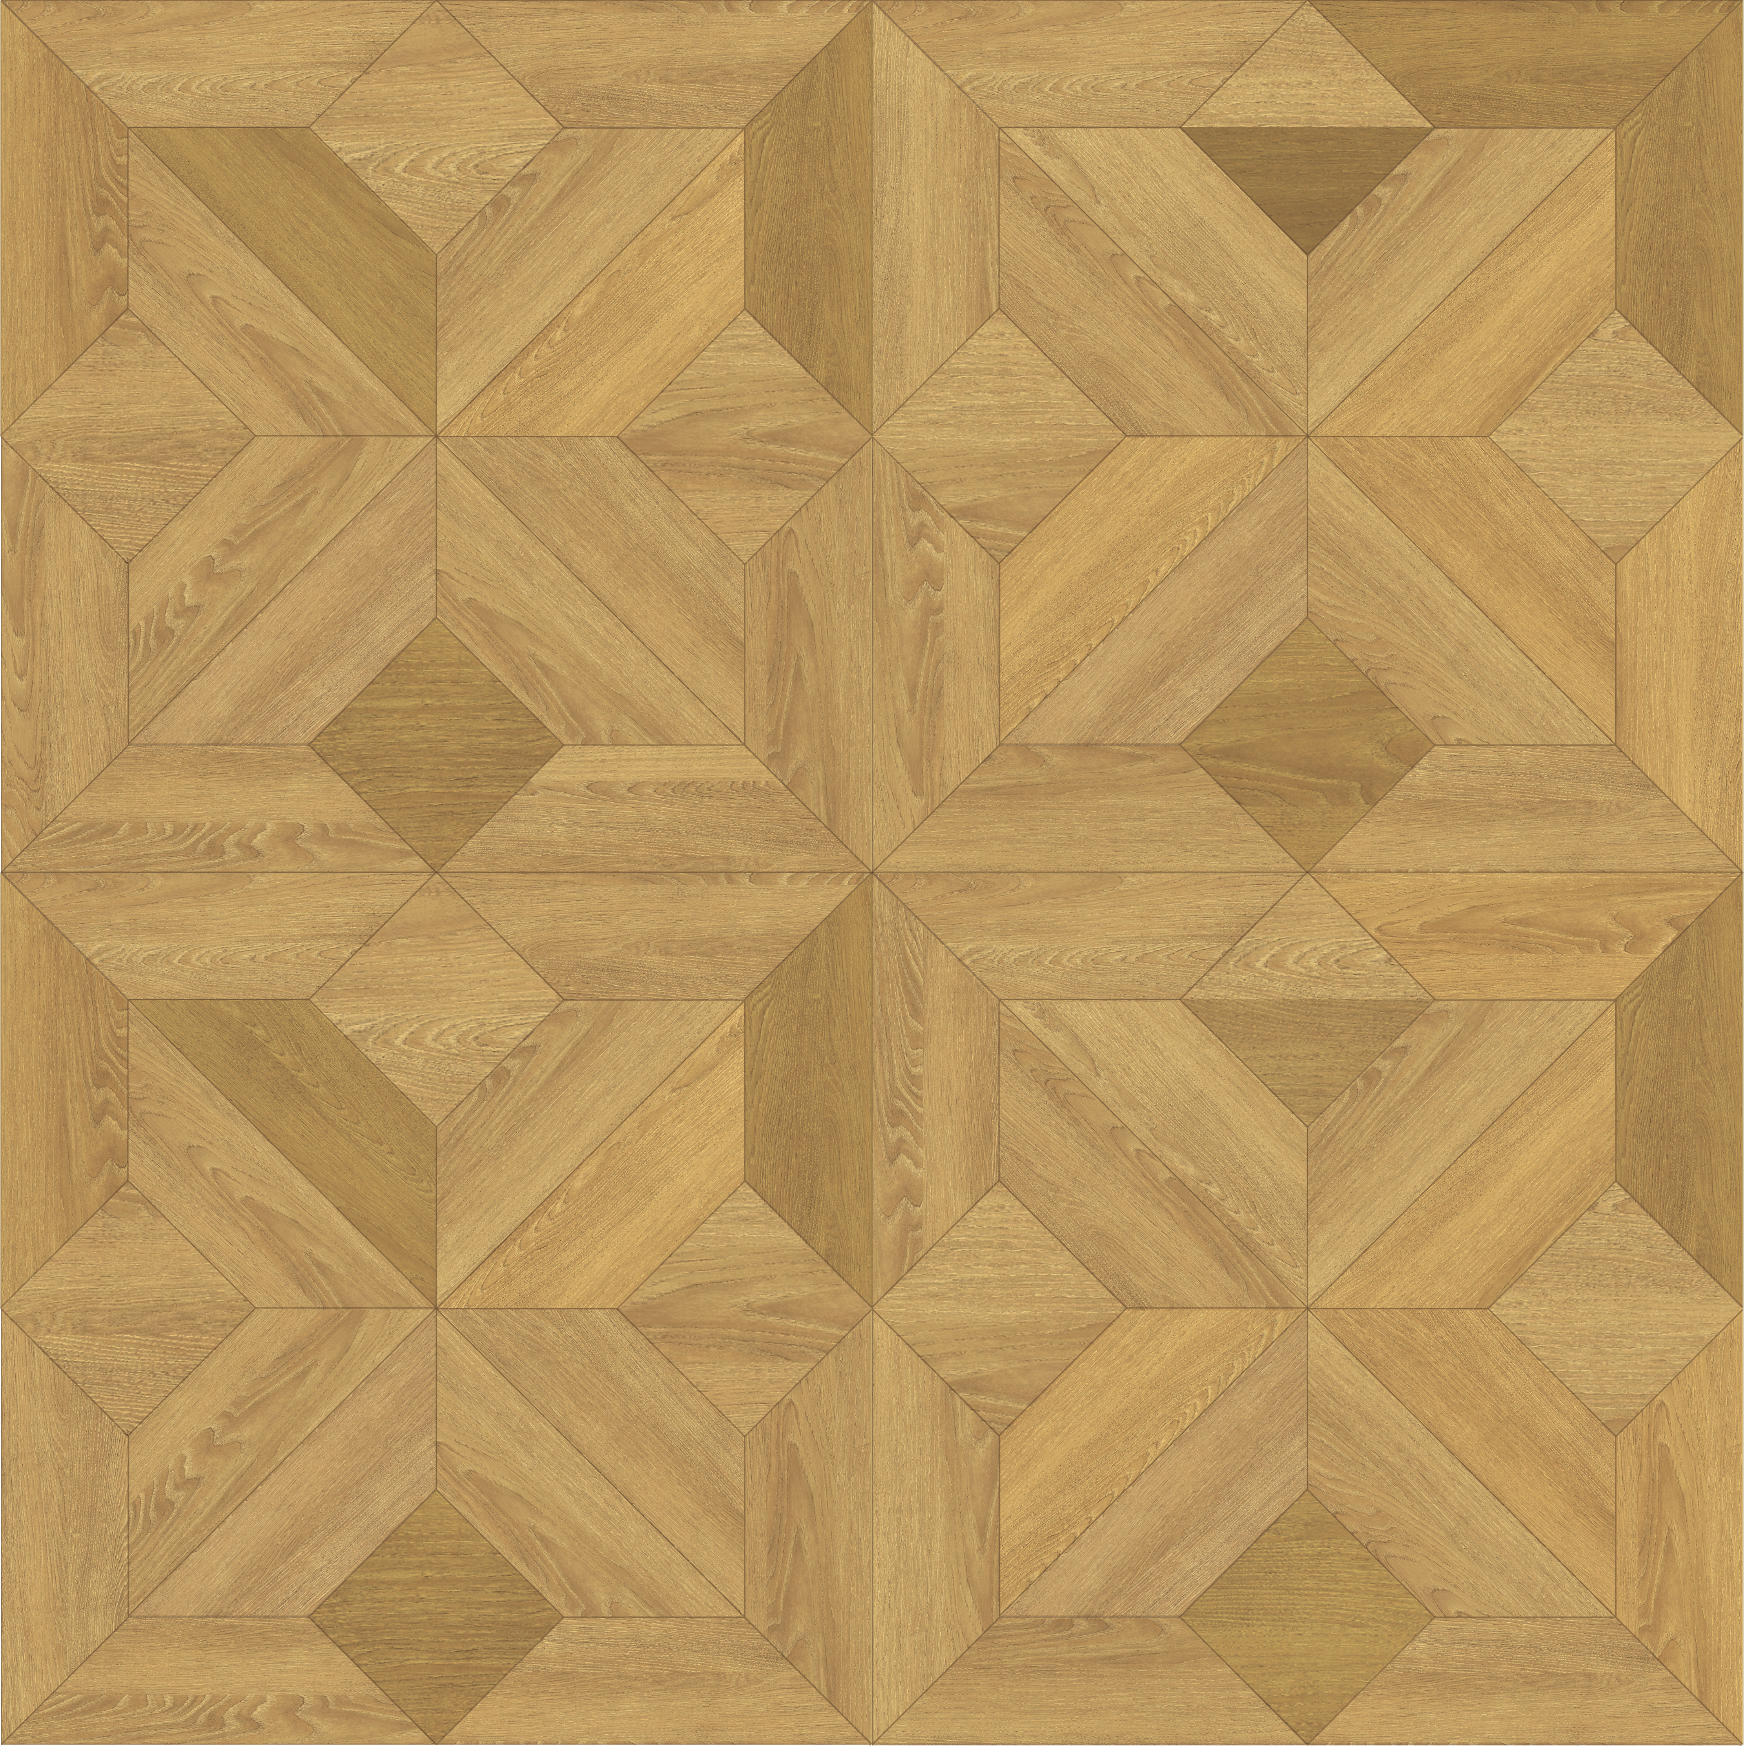 Custom Parquet Wood Floor